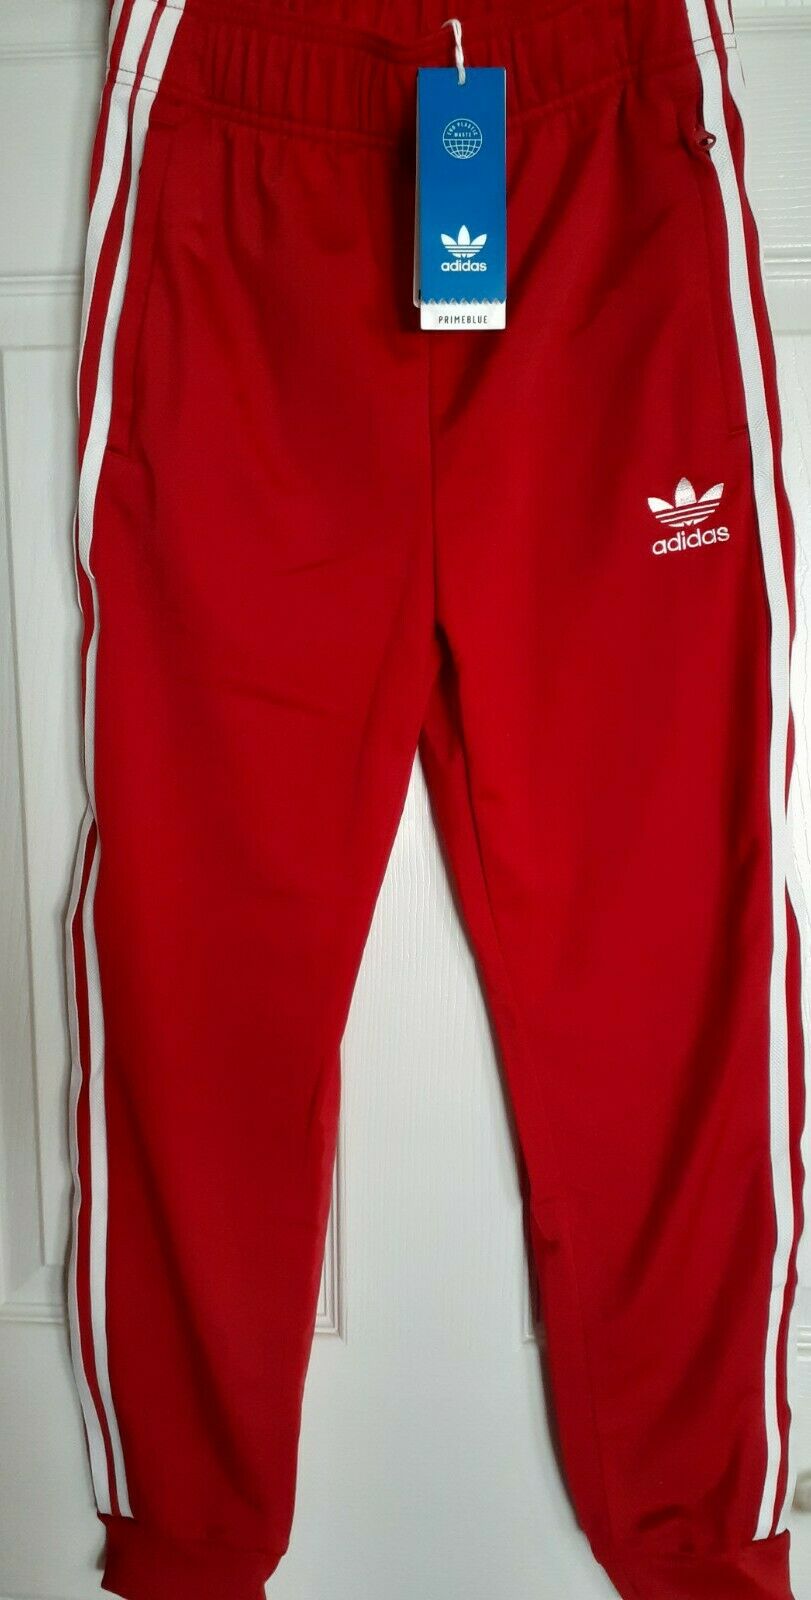 Adidas Originals Sst Track Pants Boys Scarlet White Size Medium Nwt